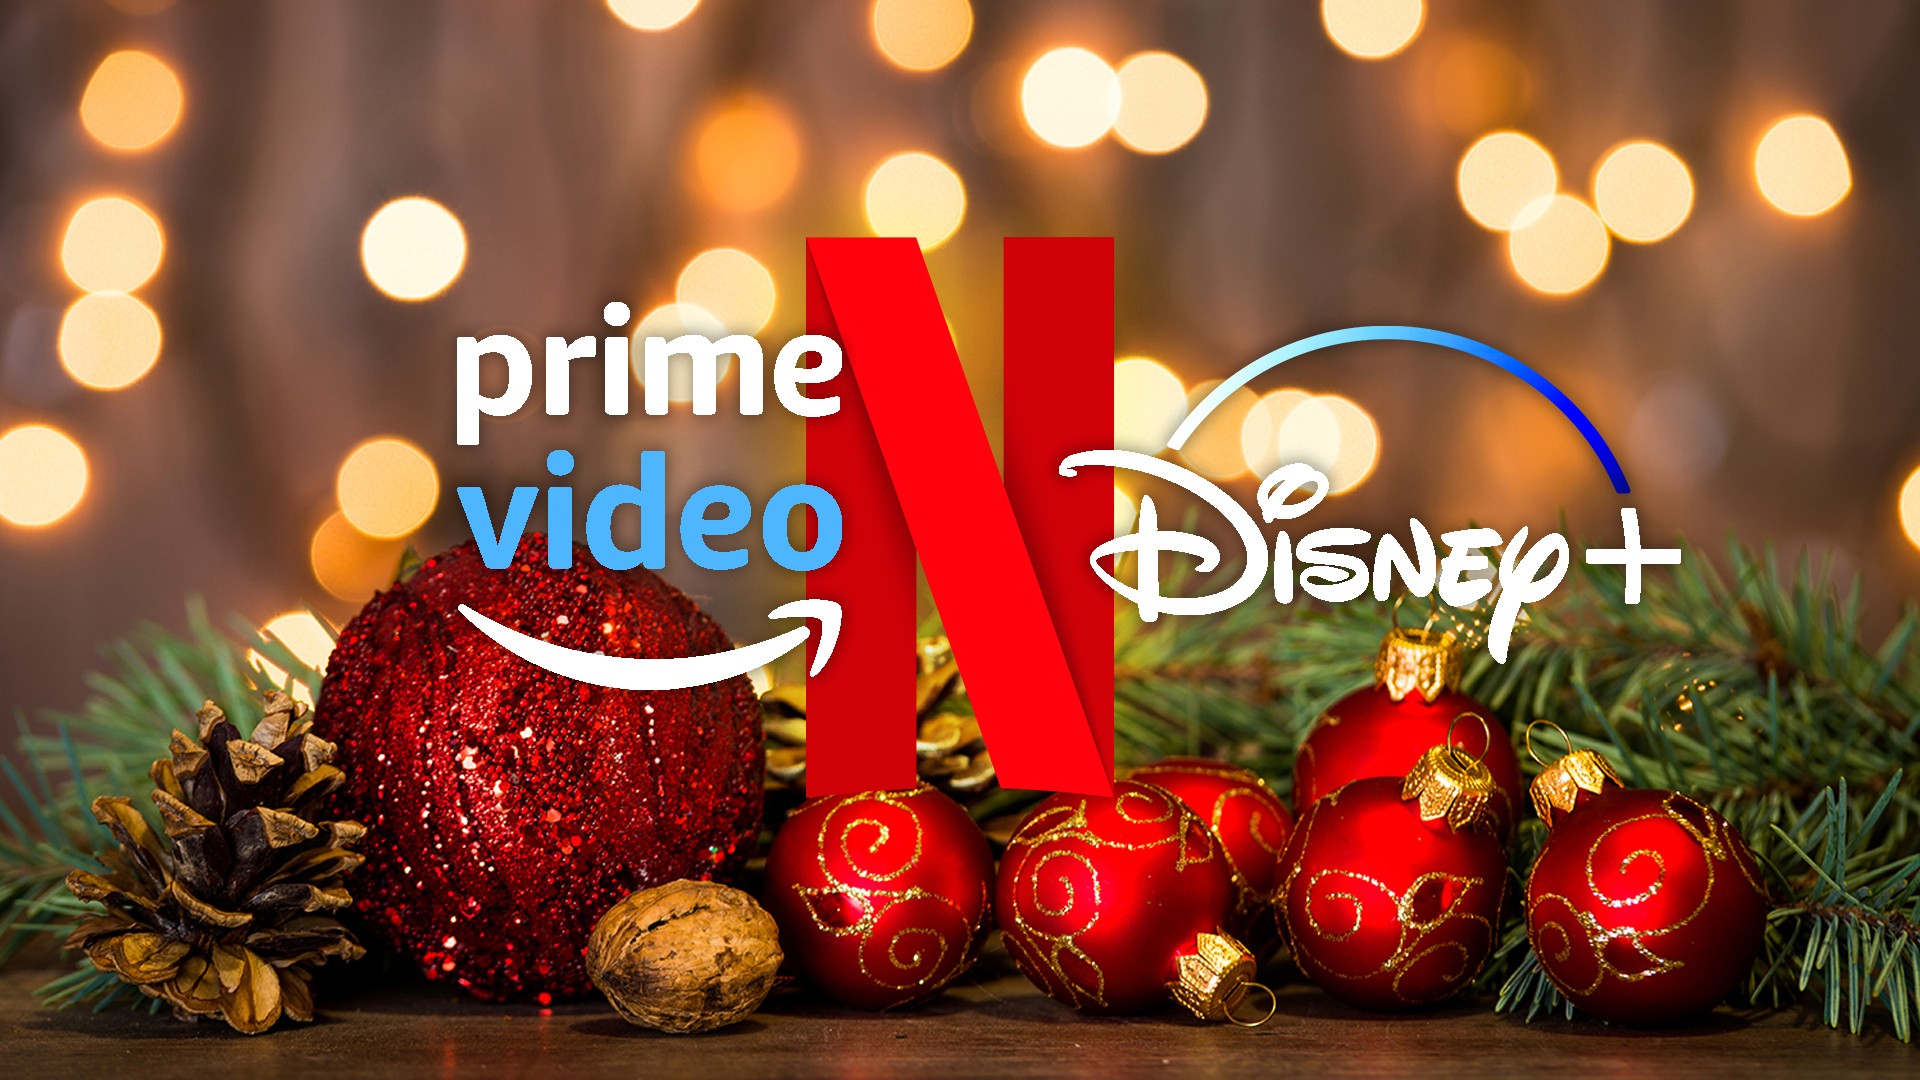 TudoTV: top 10 filmes para assistir no Natal na Netflix, Disney Plus e  Amazon Prime Video 